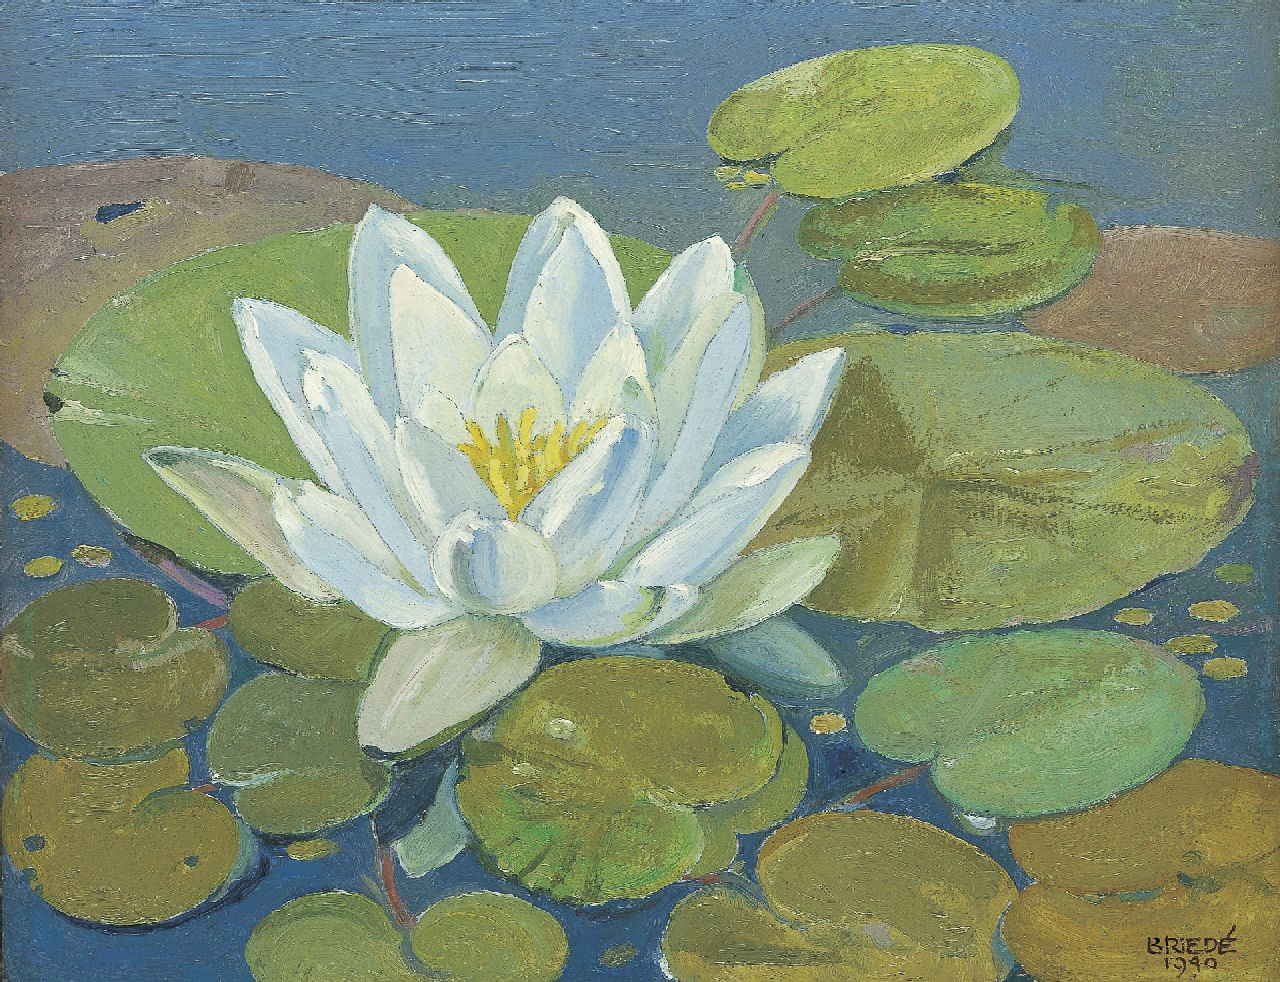 Briedé J.  | Johan Briedé, Water lily, 20,9 x 26,9 cm, signed l.r. und dated 1940